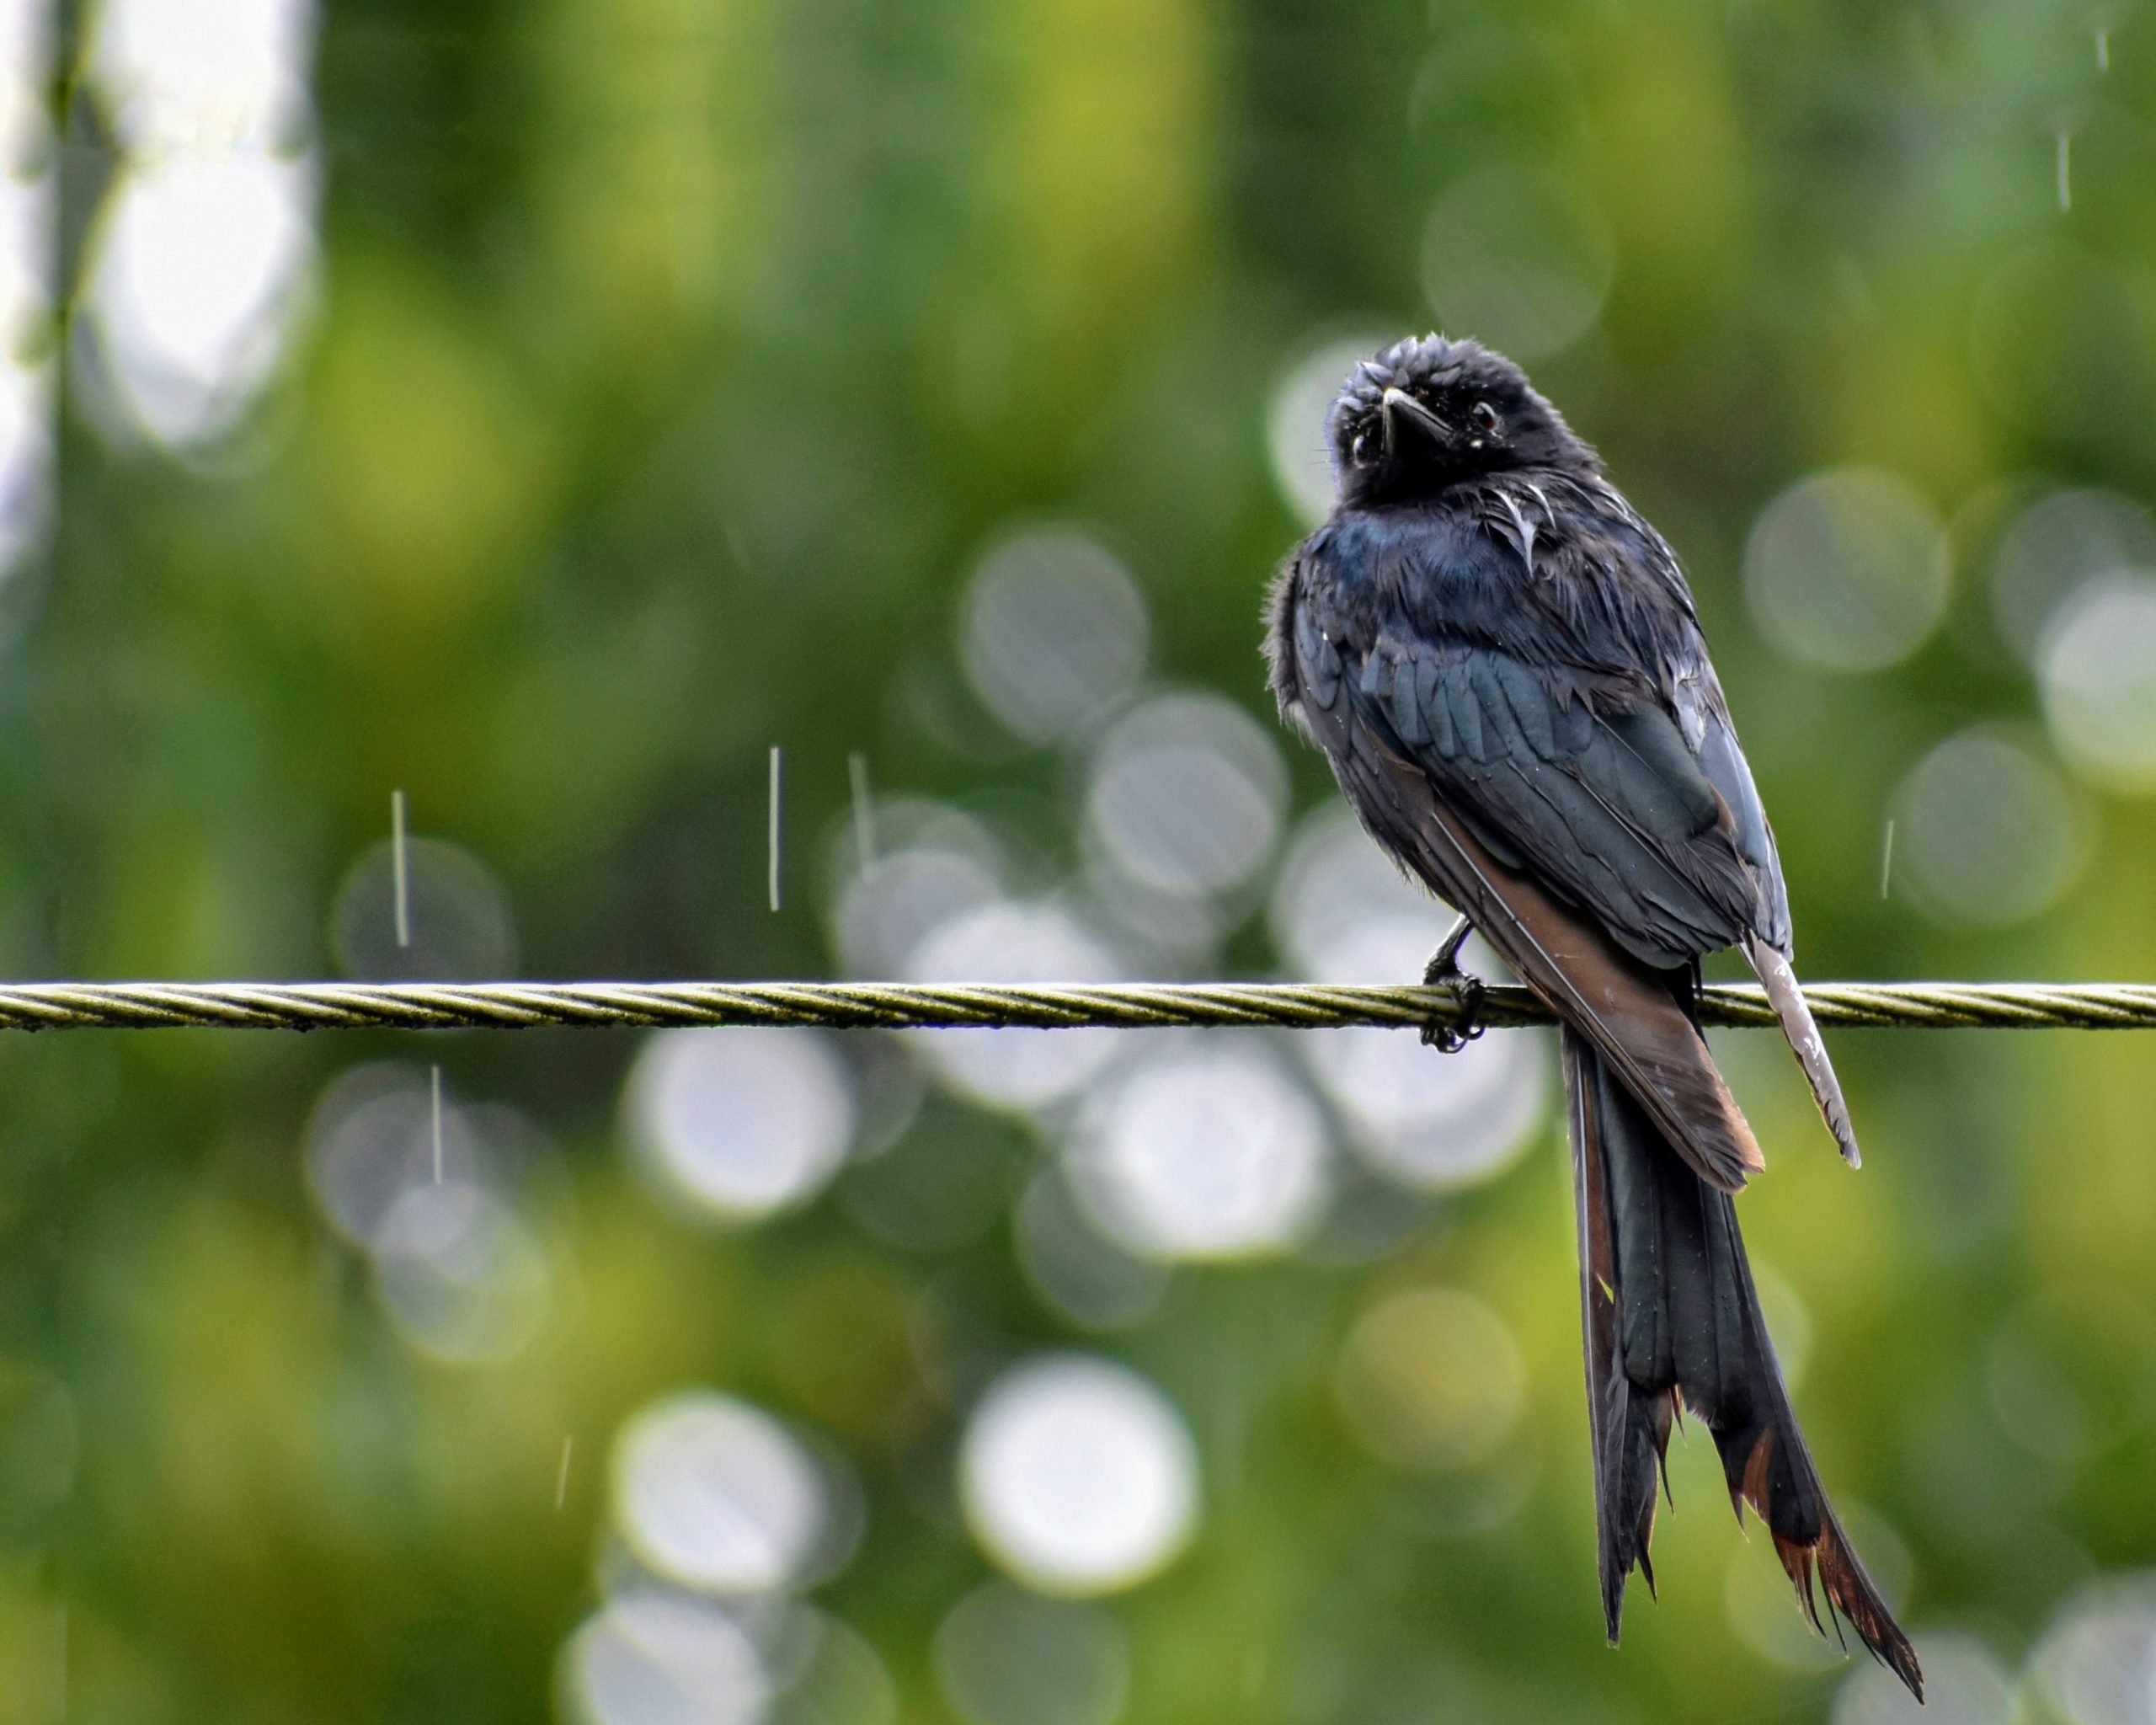 A bird sitting on a wire